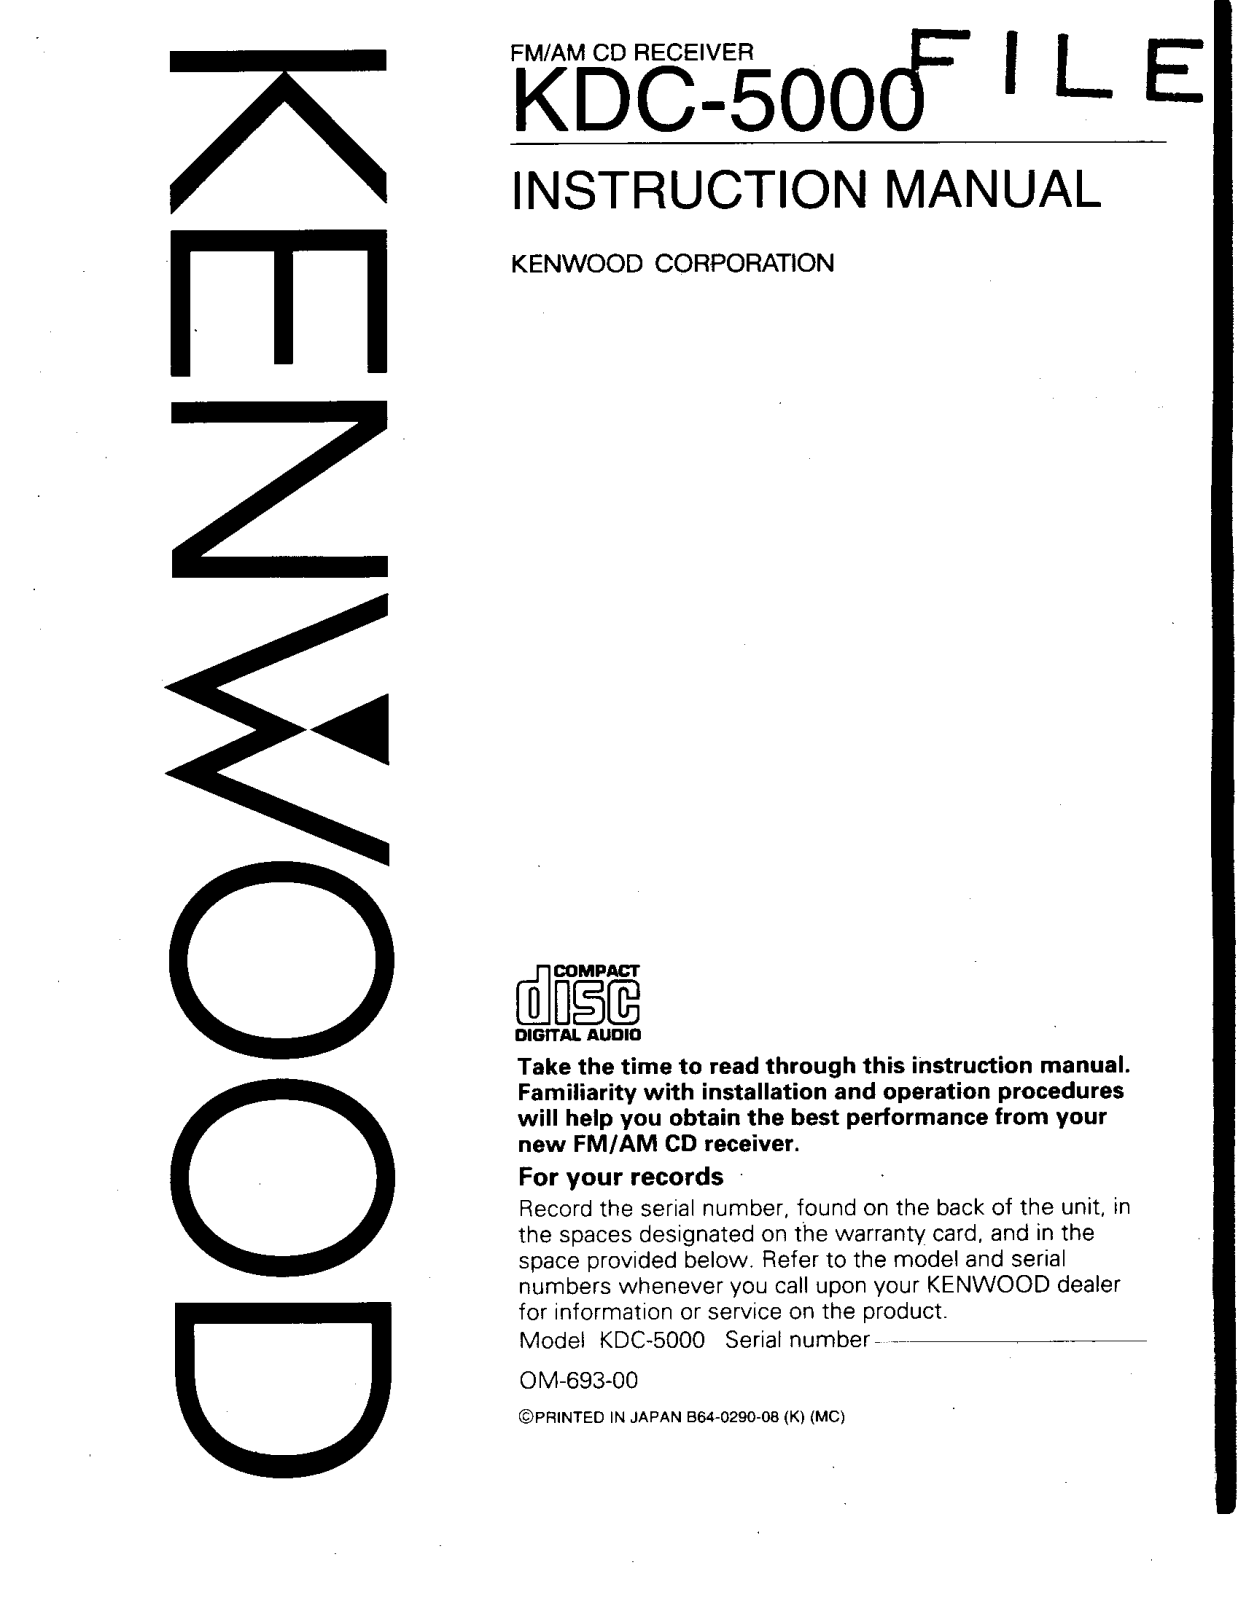 Kenwood KDC-5000 Owner's Manual